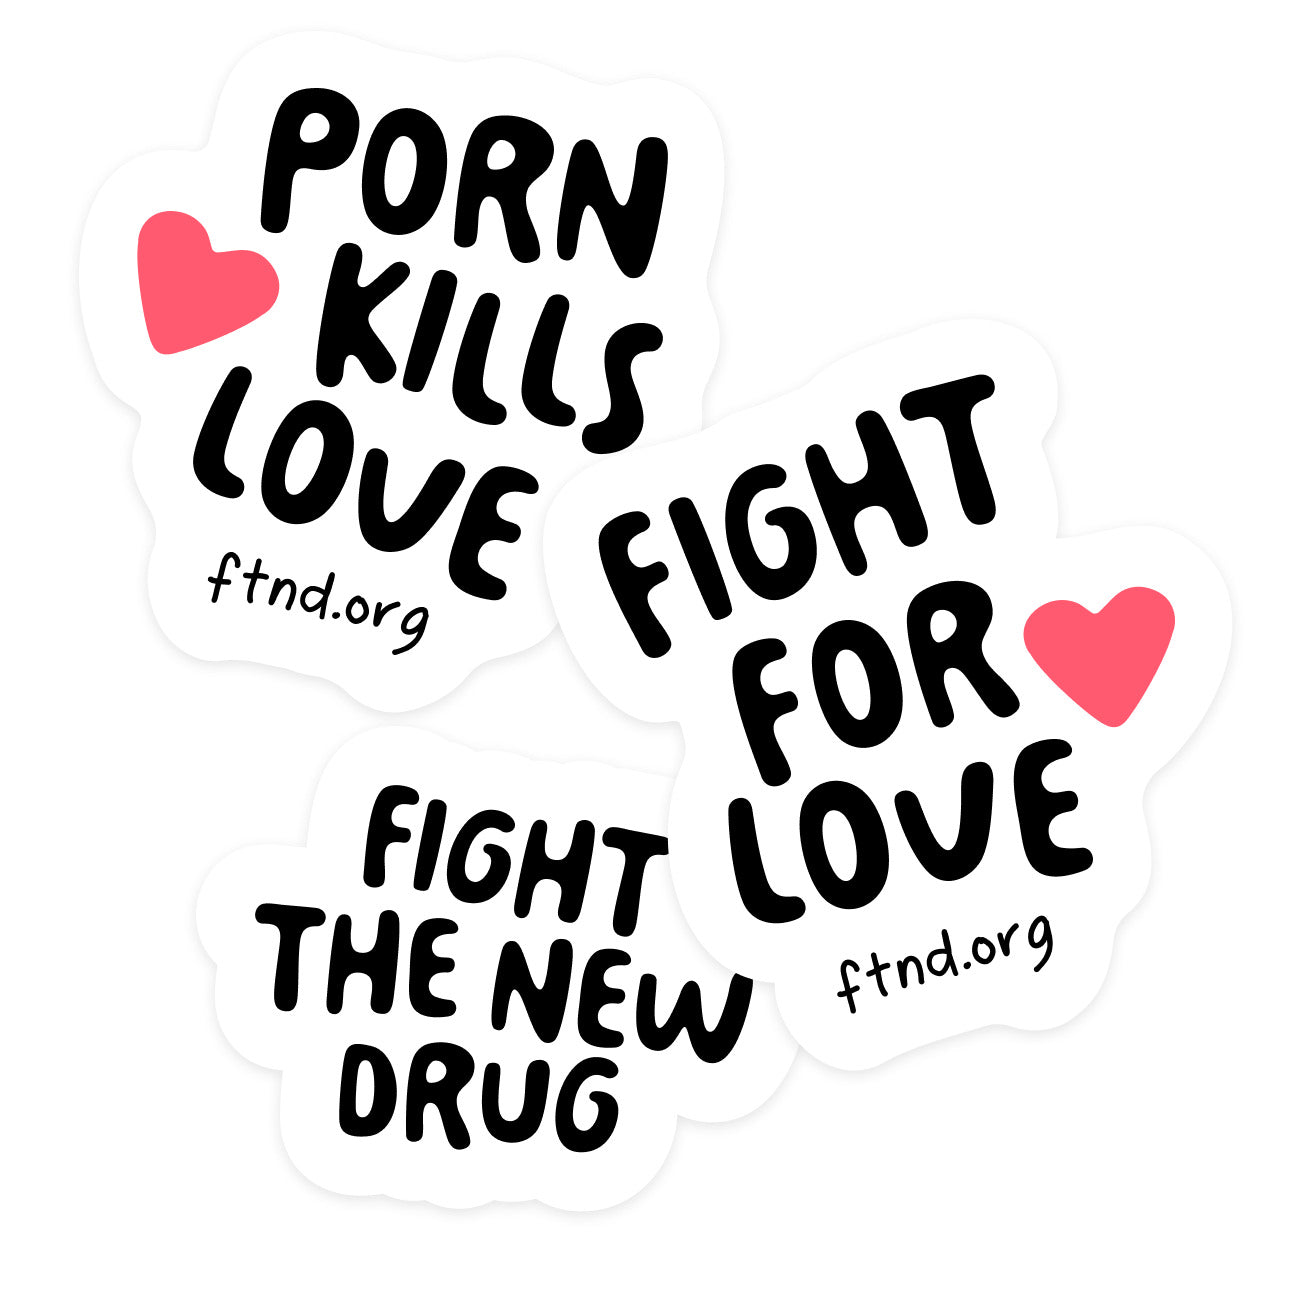 Fight the New Drug Heart Sticker Sheet